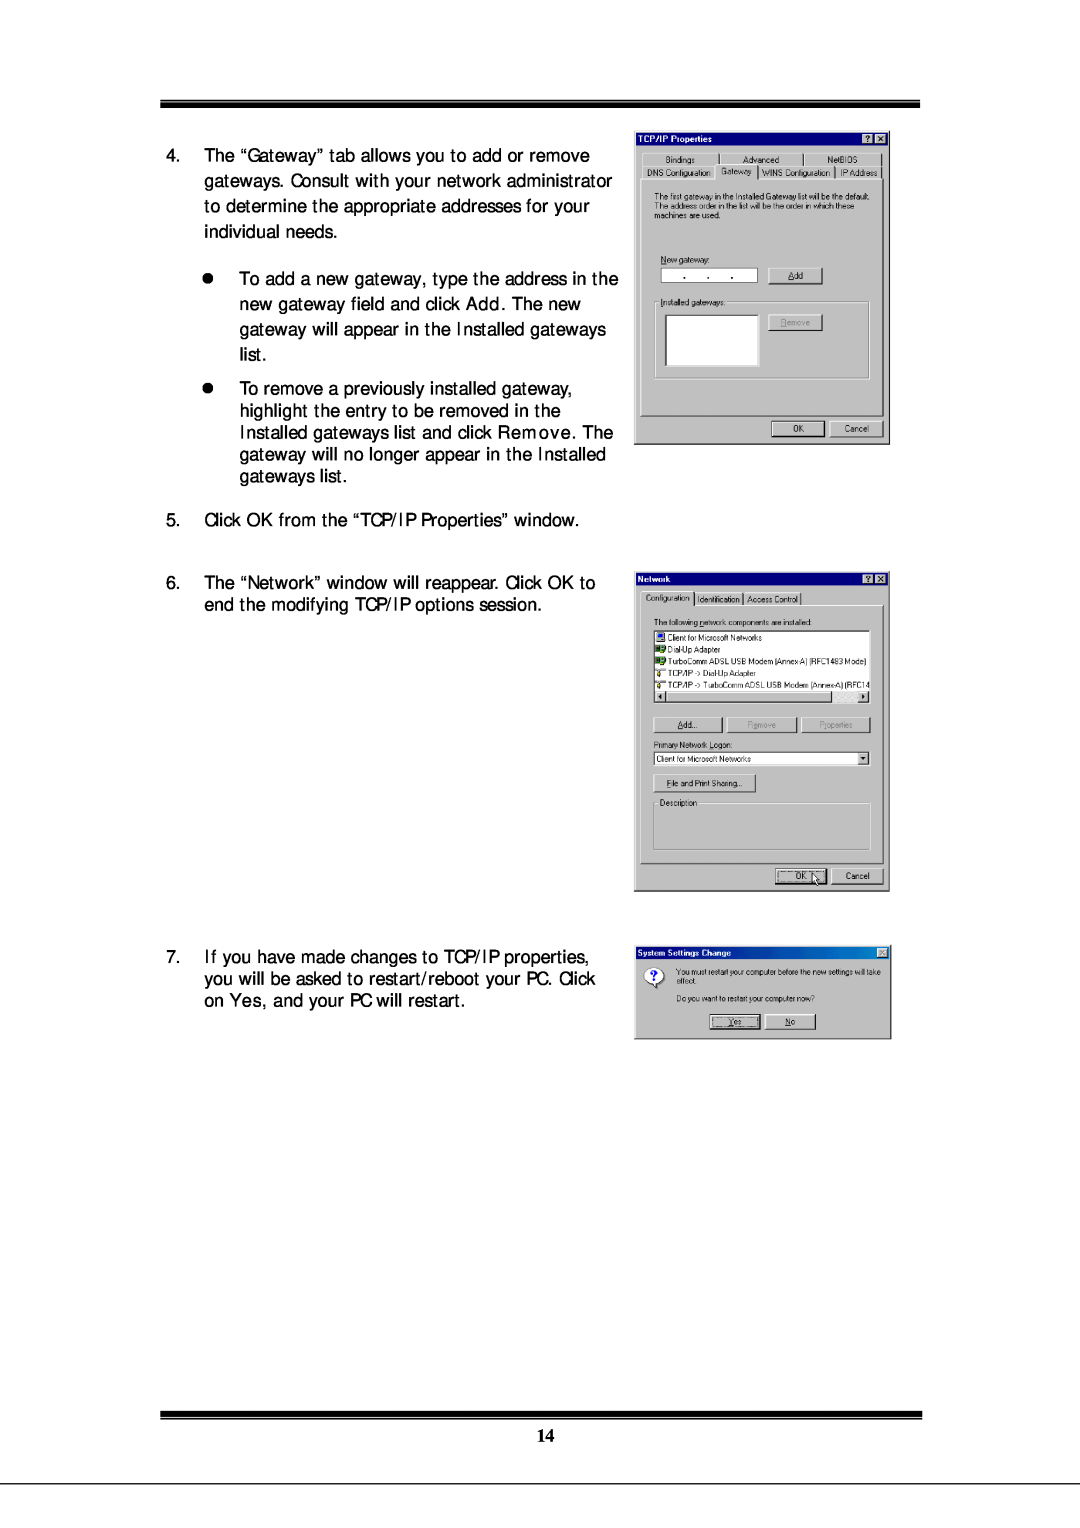 Microsoft EA900 manual Click OK from the “TCP/IP Properties” window 